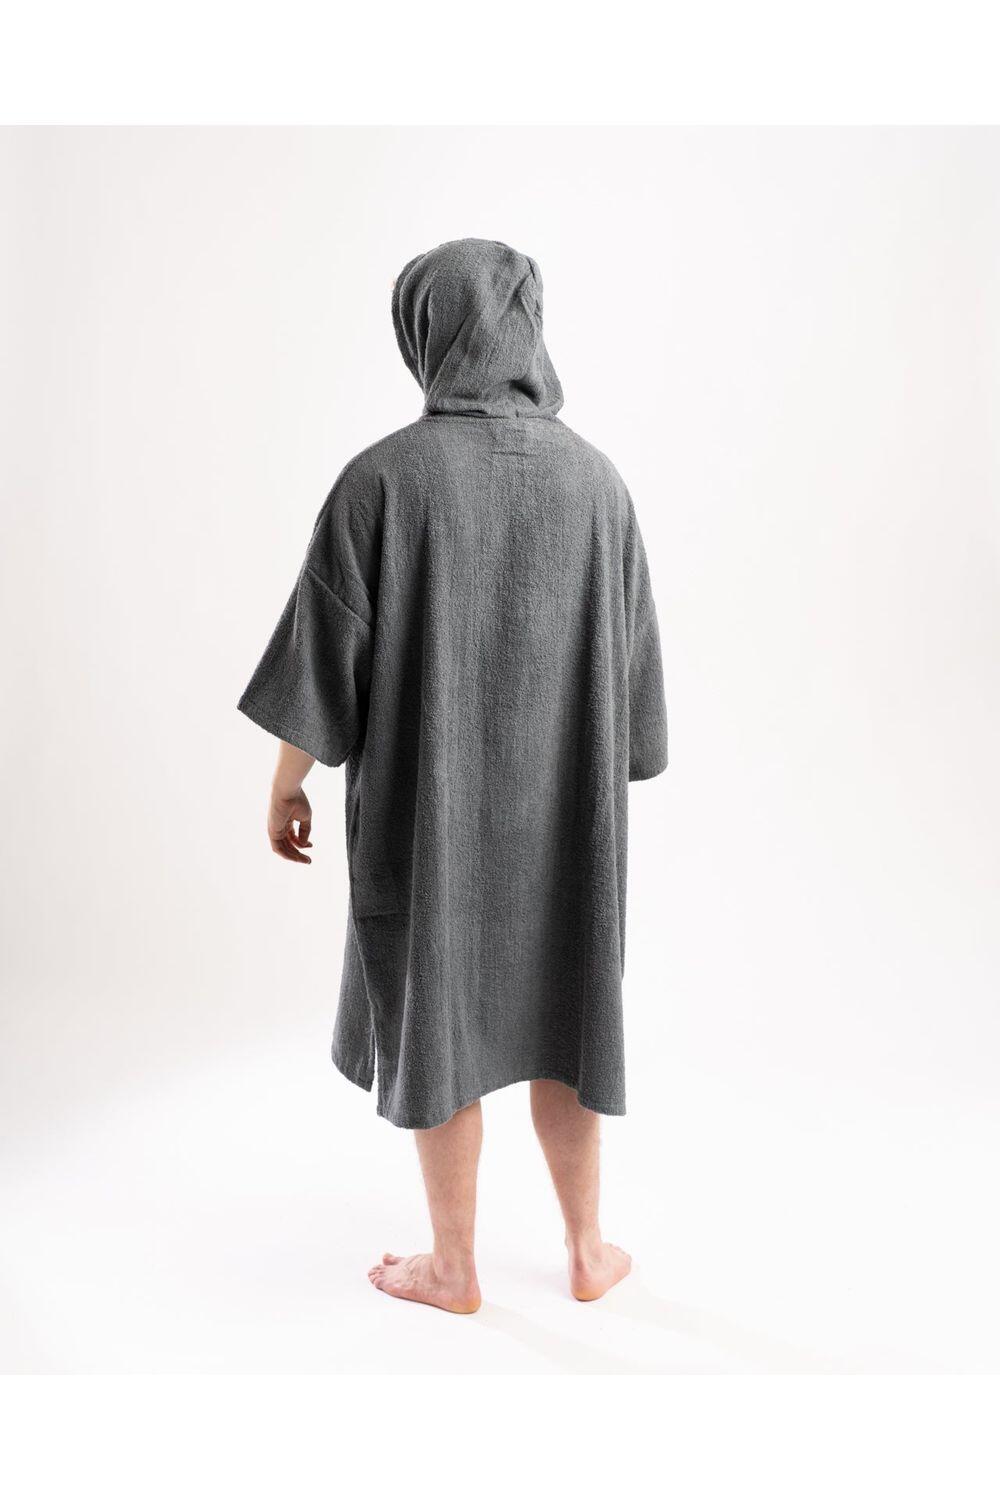 Adults Hooded Change Robe - Grey 2/7